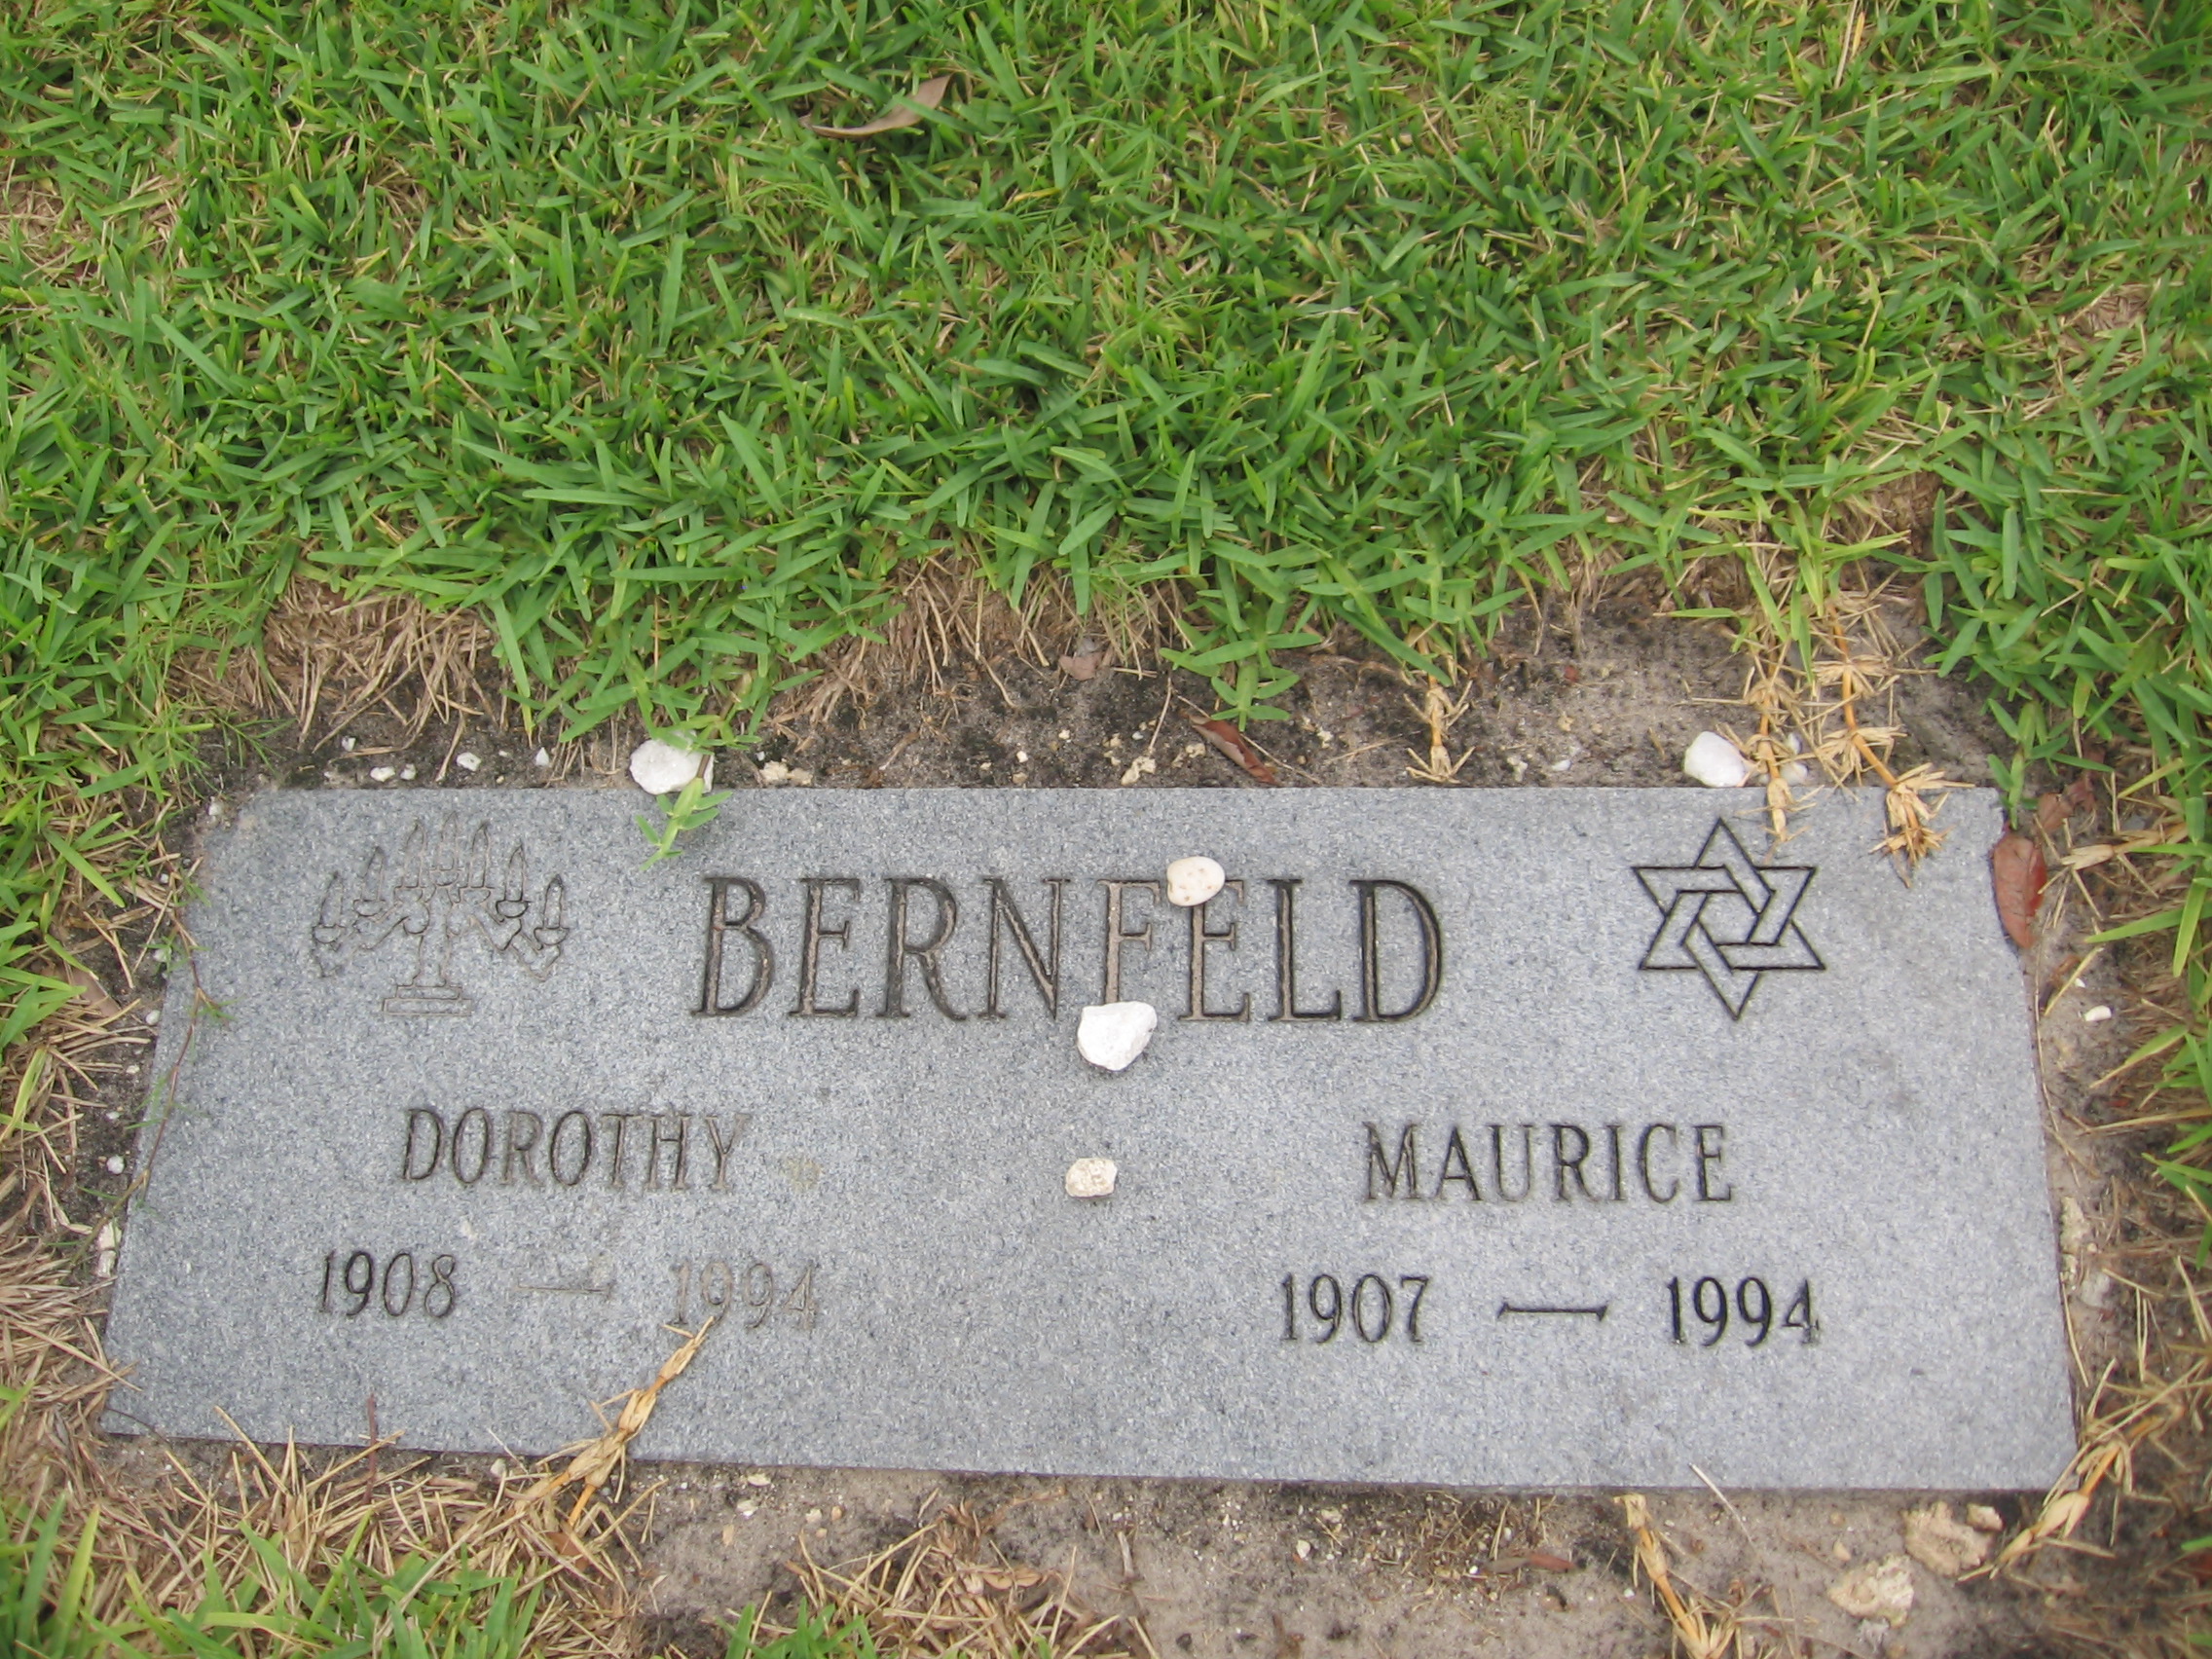 Maurice Bernfeld